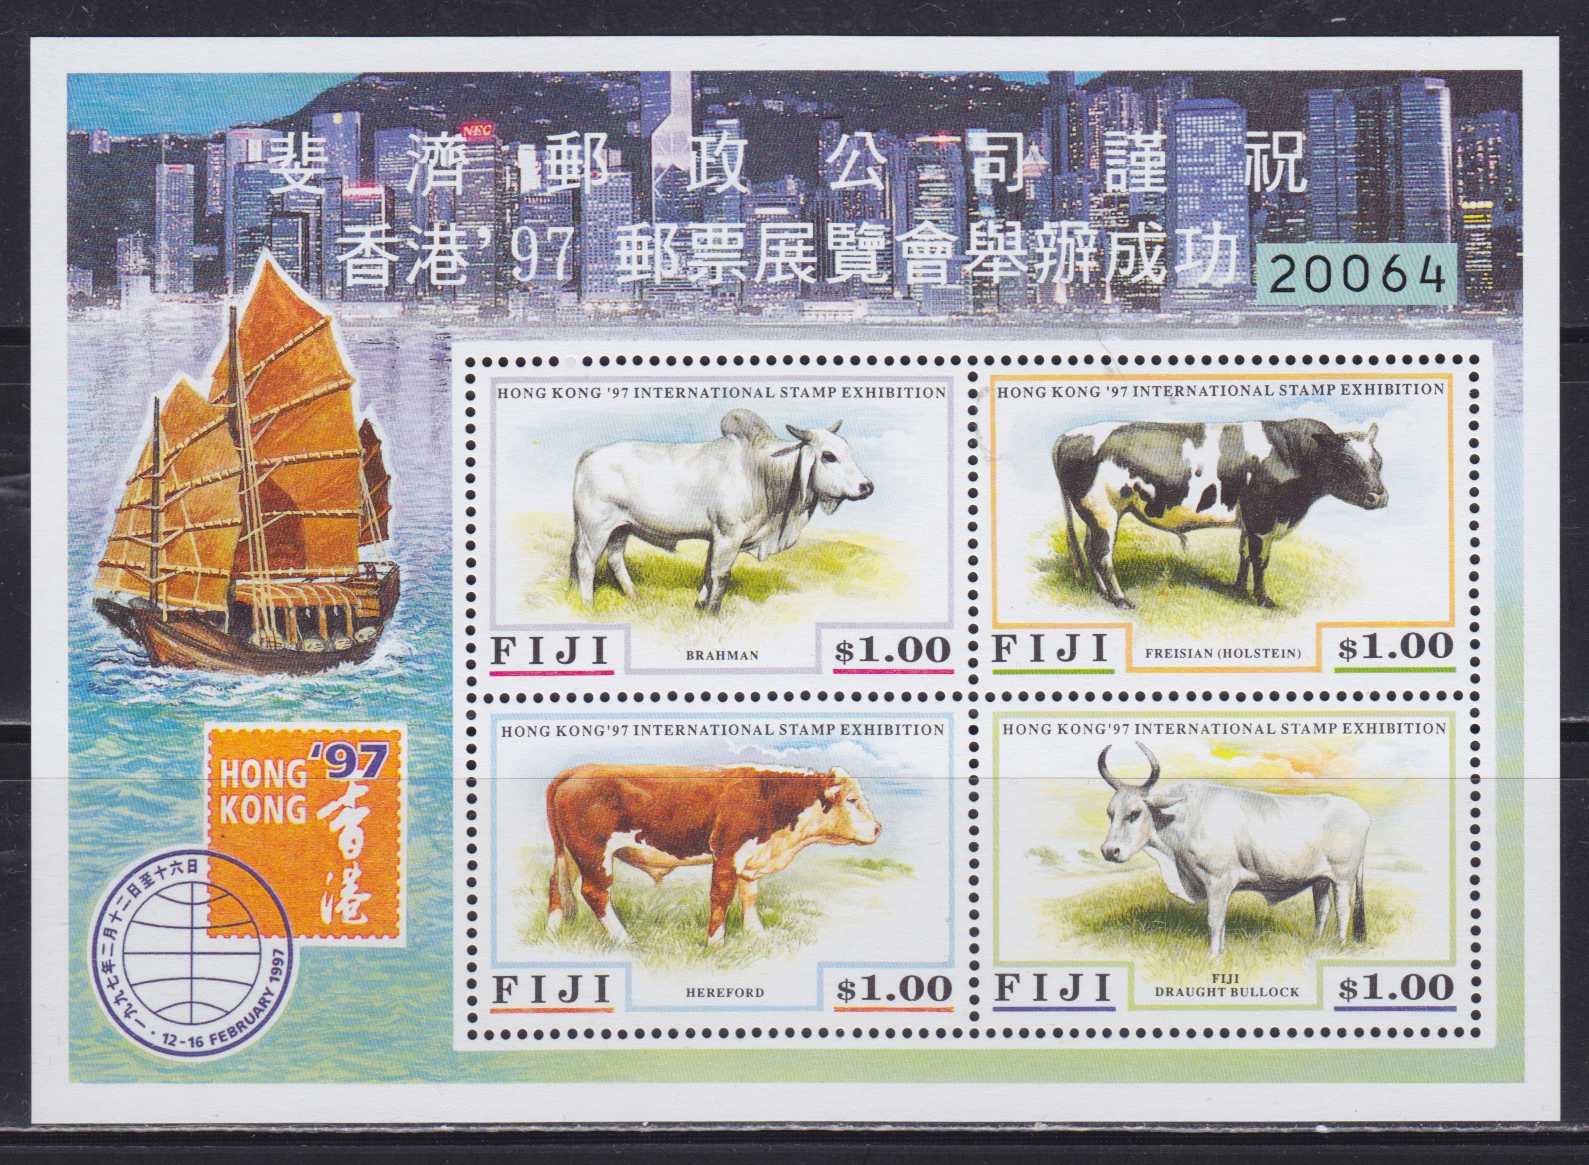 Stampworld com каталог. Почтовые марки Фиджи. Почтовые марки Hong Kong фауна. Корова на почтовой марке. Почтовые марки Гонконг по годам.